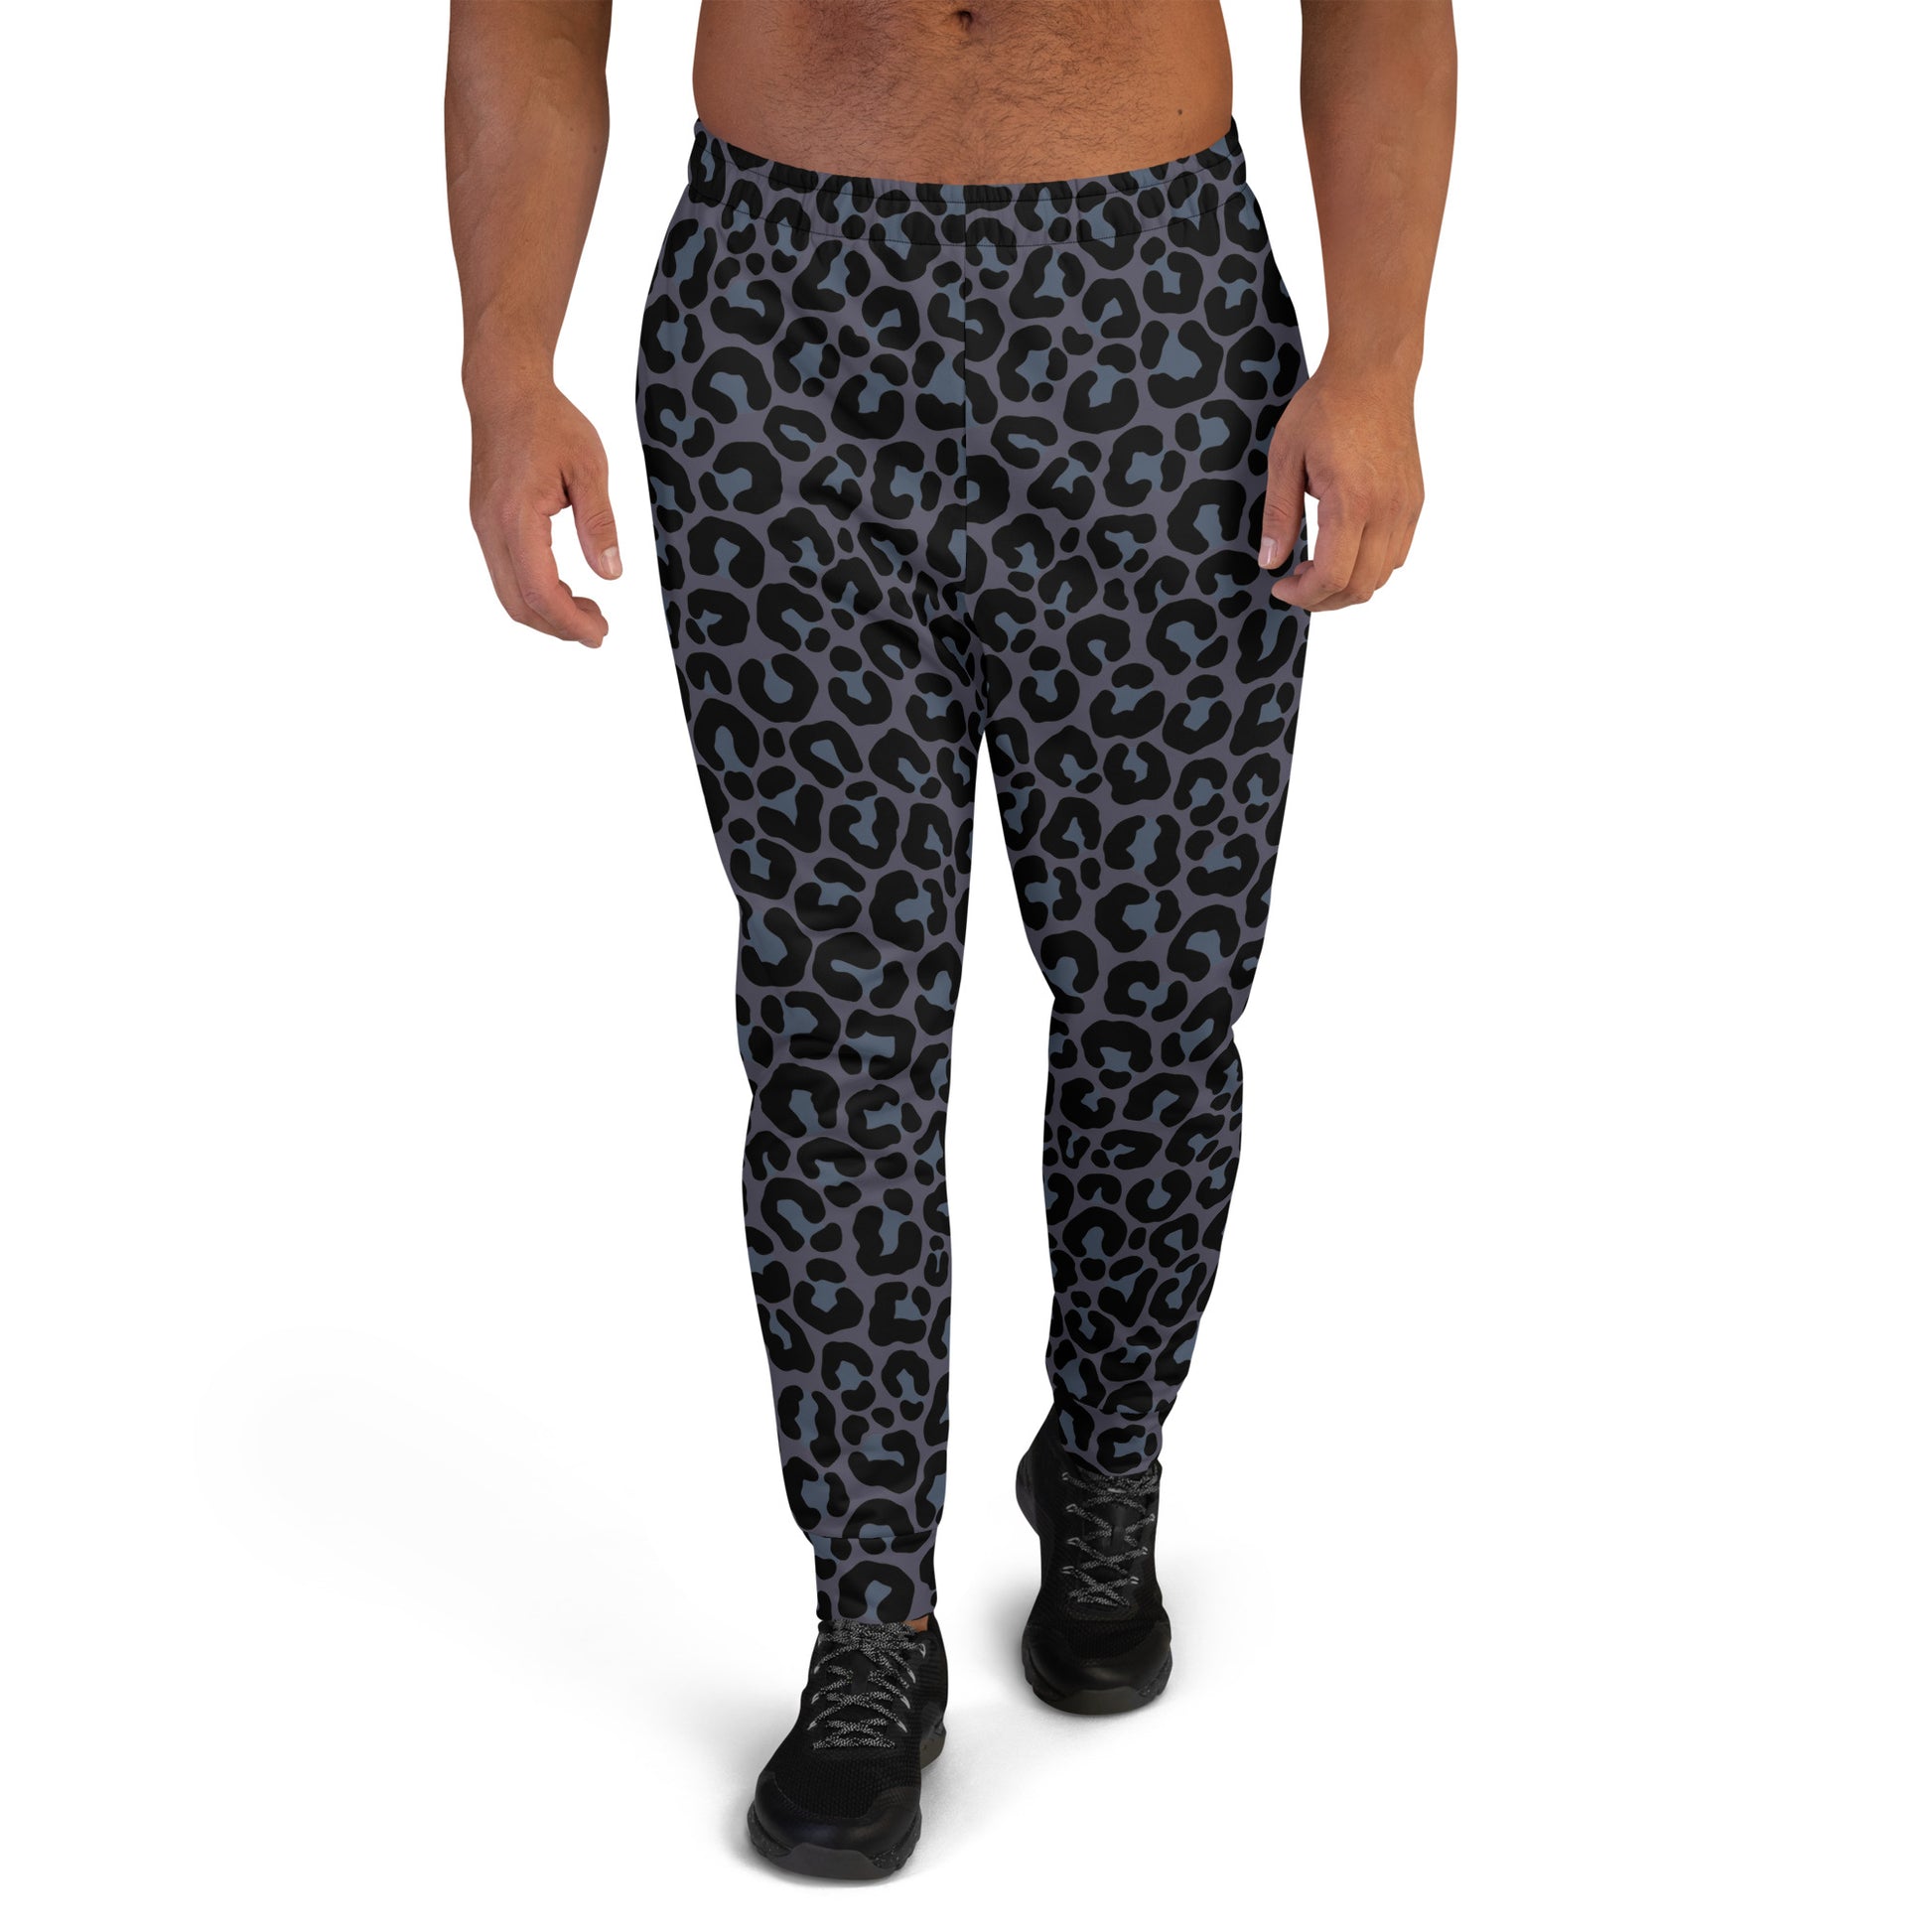 All Black Leopard Men Joggers Sweatpants with Pockets, Animal Panther Fleece  Fun Comfy Cotton Sweats Pants Loungewear Starcove Fashion